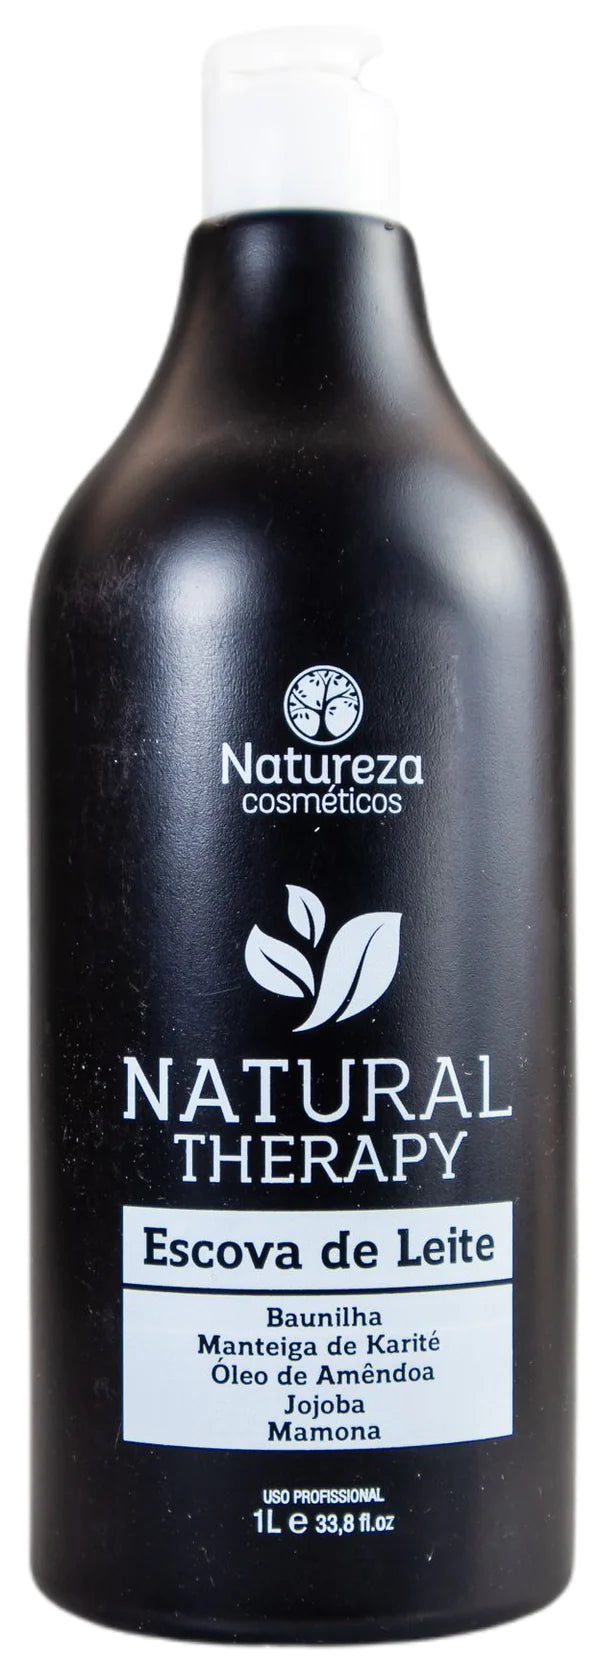 Escova De Leite (Milk Brush)  (Natureza Cosmeticos Natural Therapy 35oz)